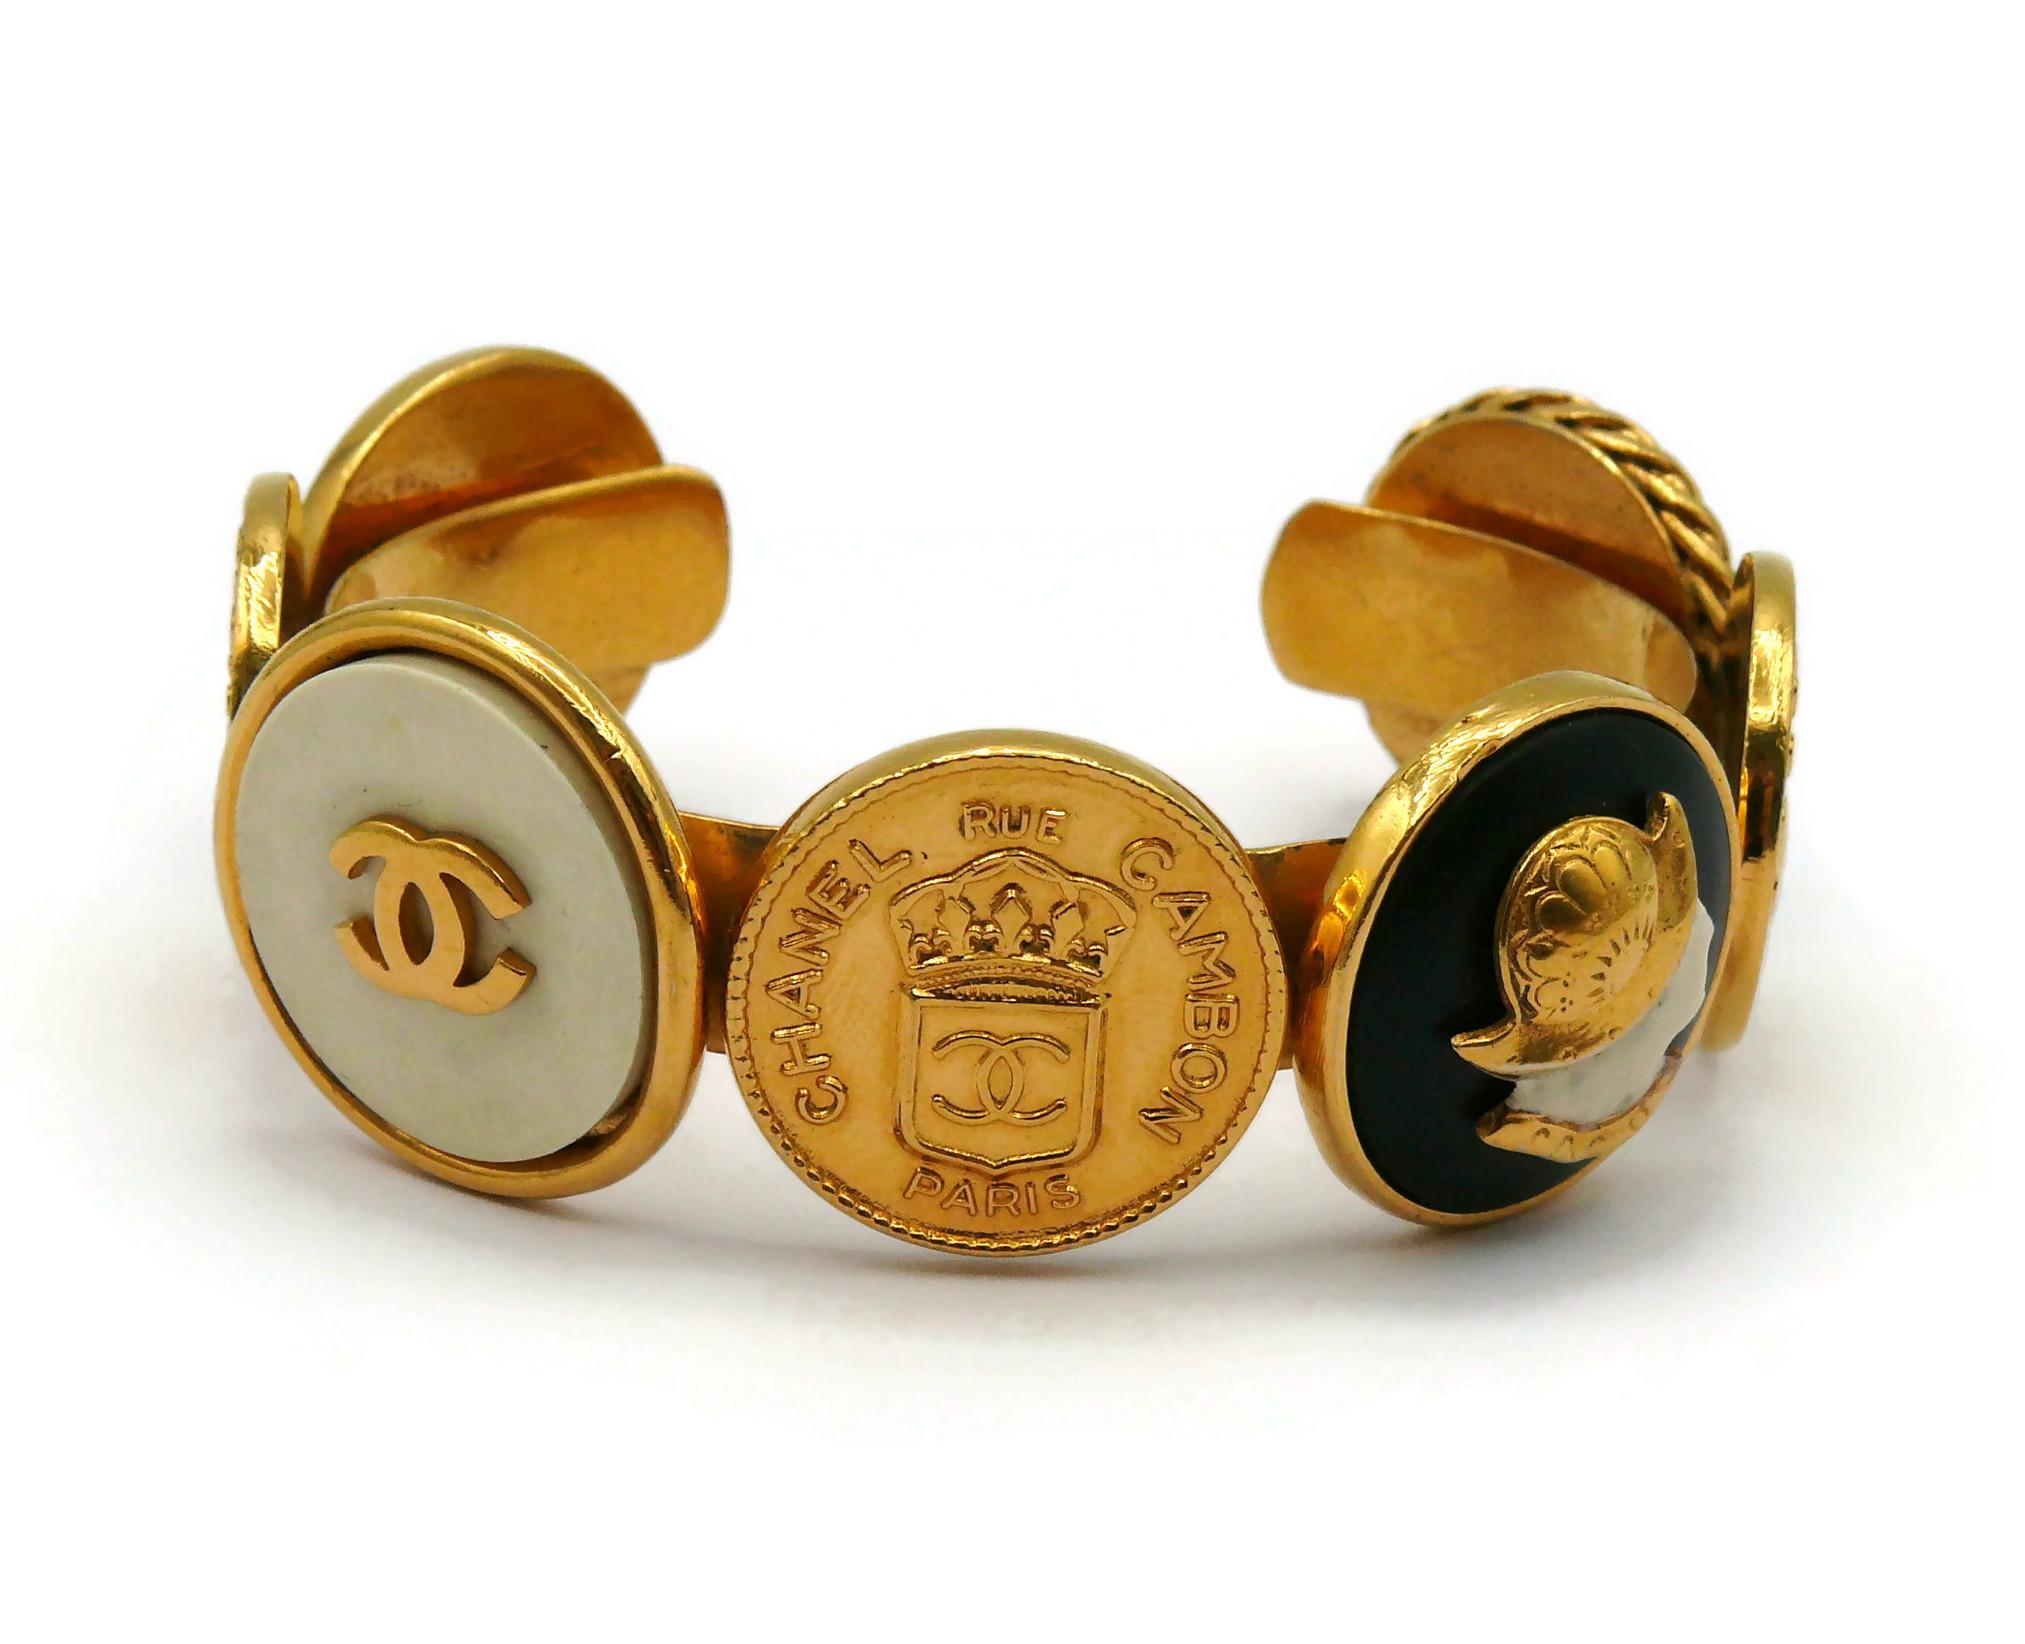 CHANEL Vintage Iconic Gold Tone Coins Bangle Bracelet For Sale 3